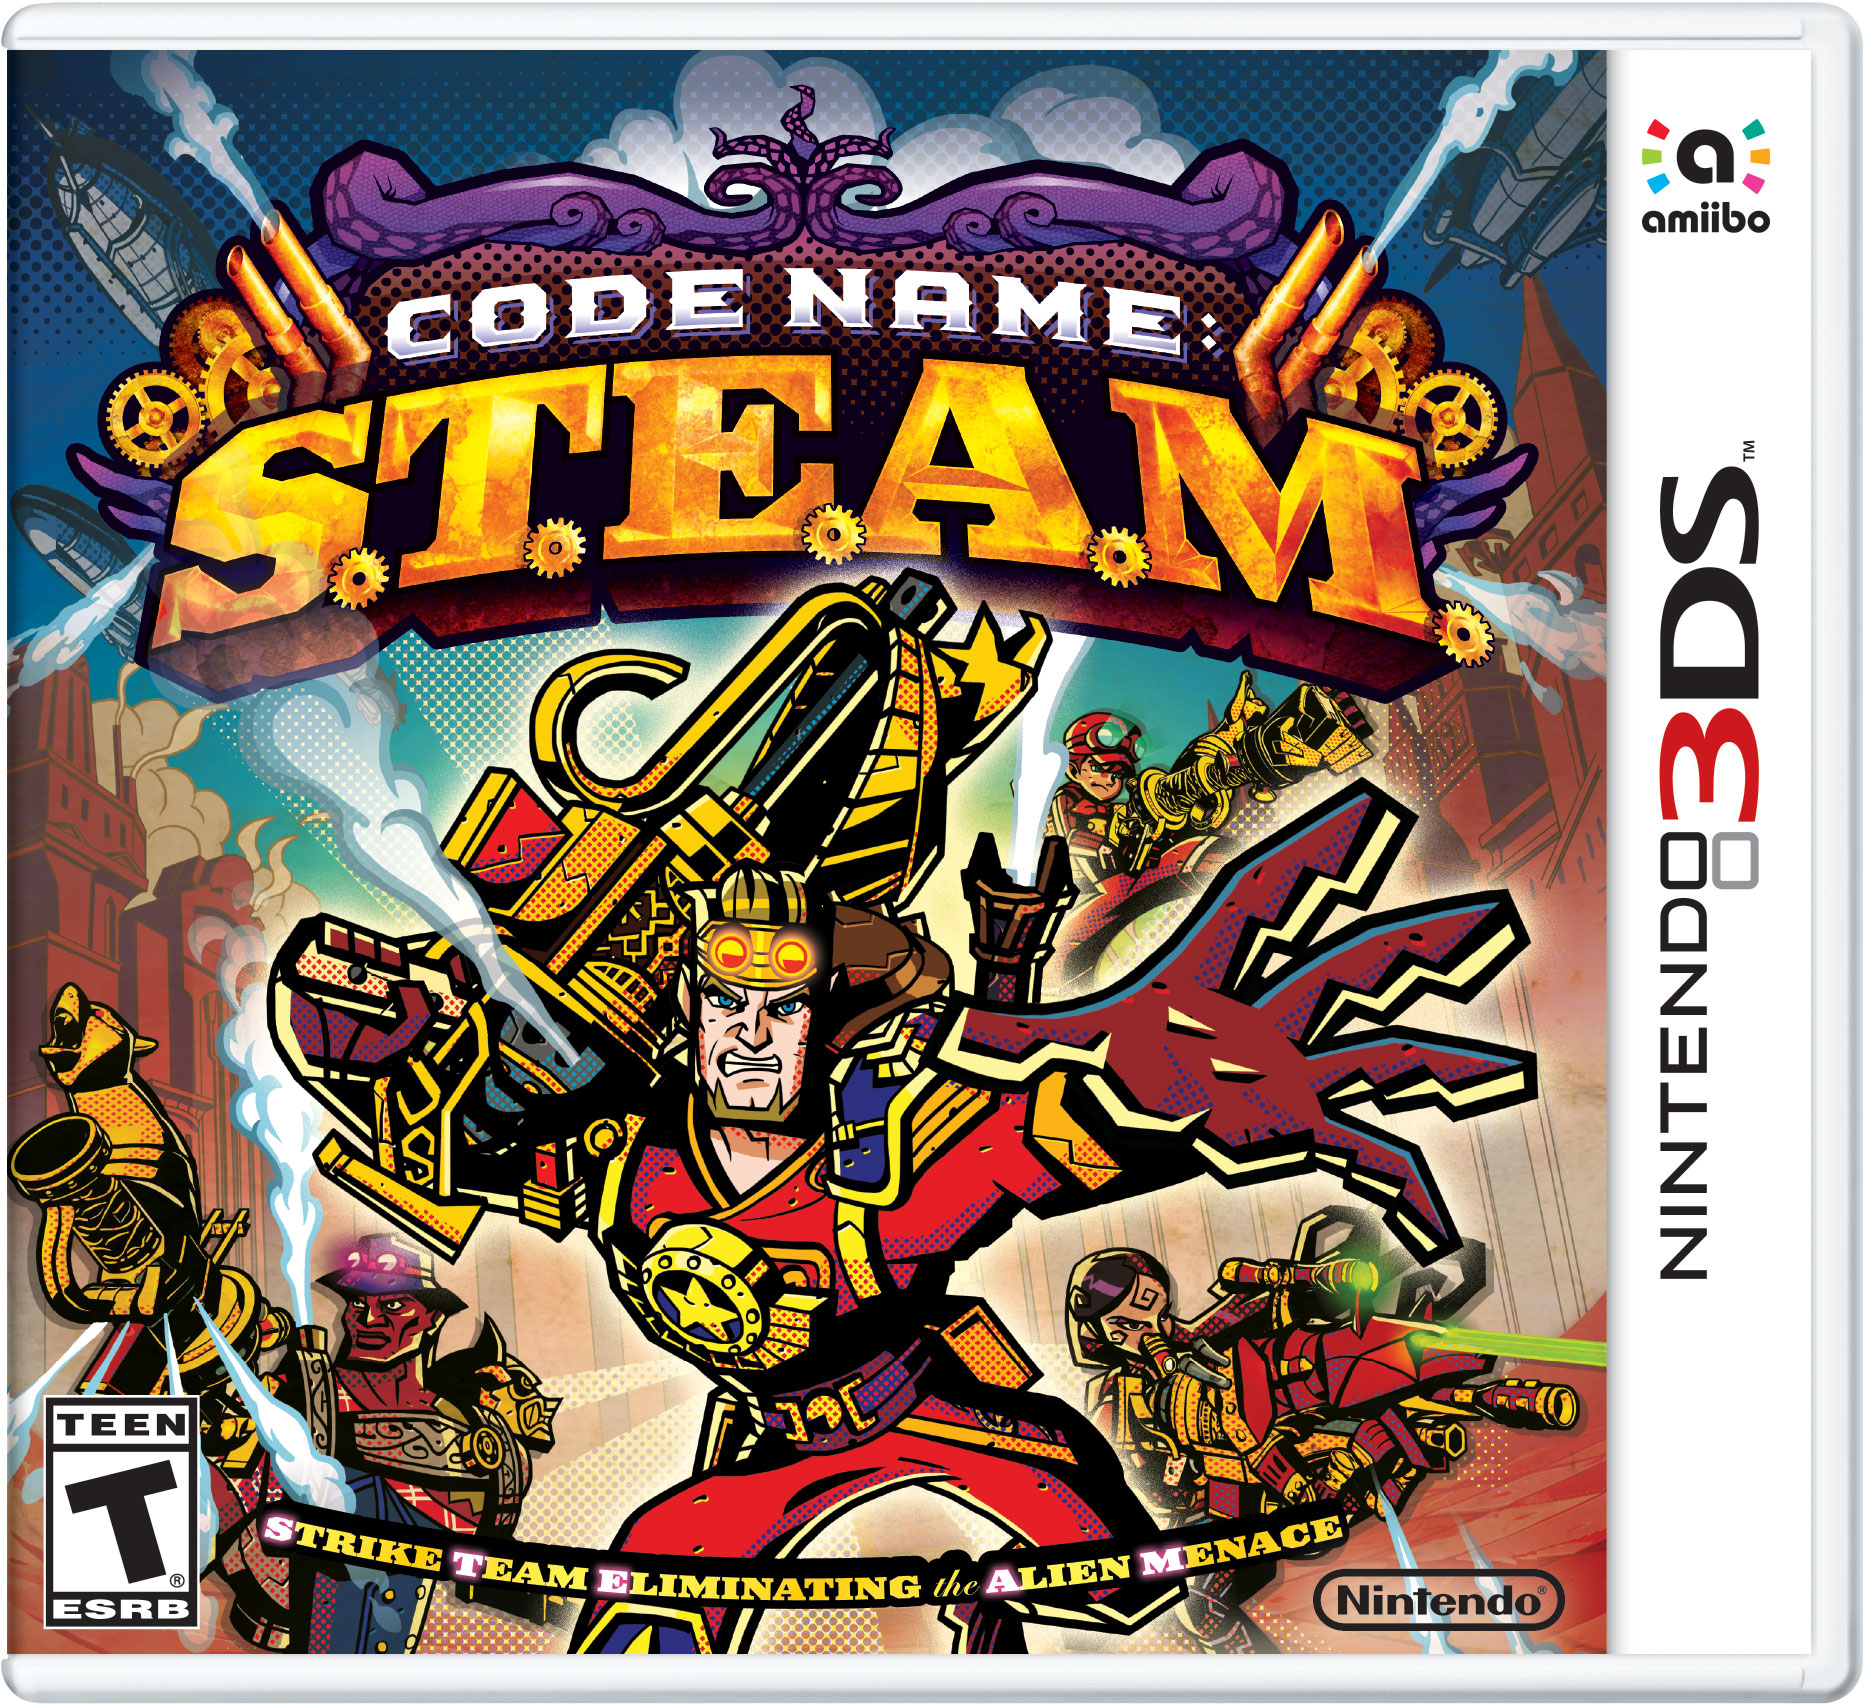 Code name please. Игра для Нинтендо 3 DS Knight. Код нейм игра. Игра m&DS. S.T.E.A.M.